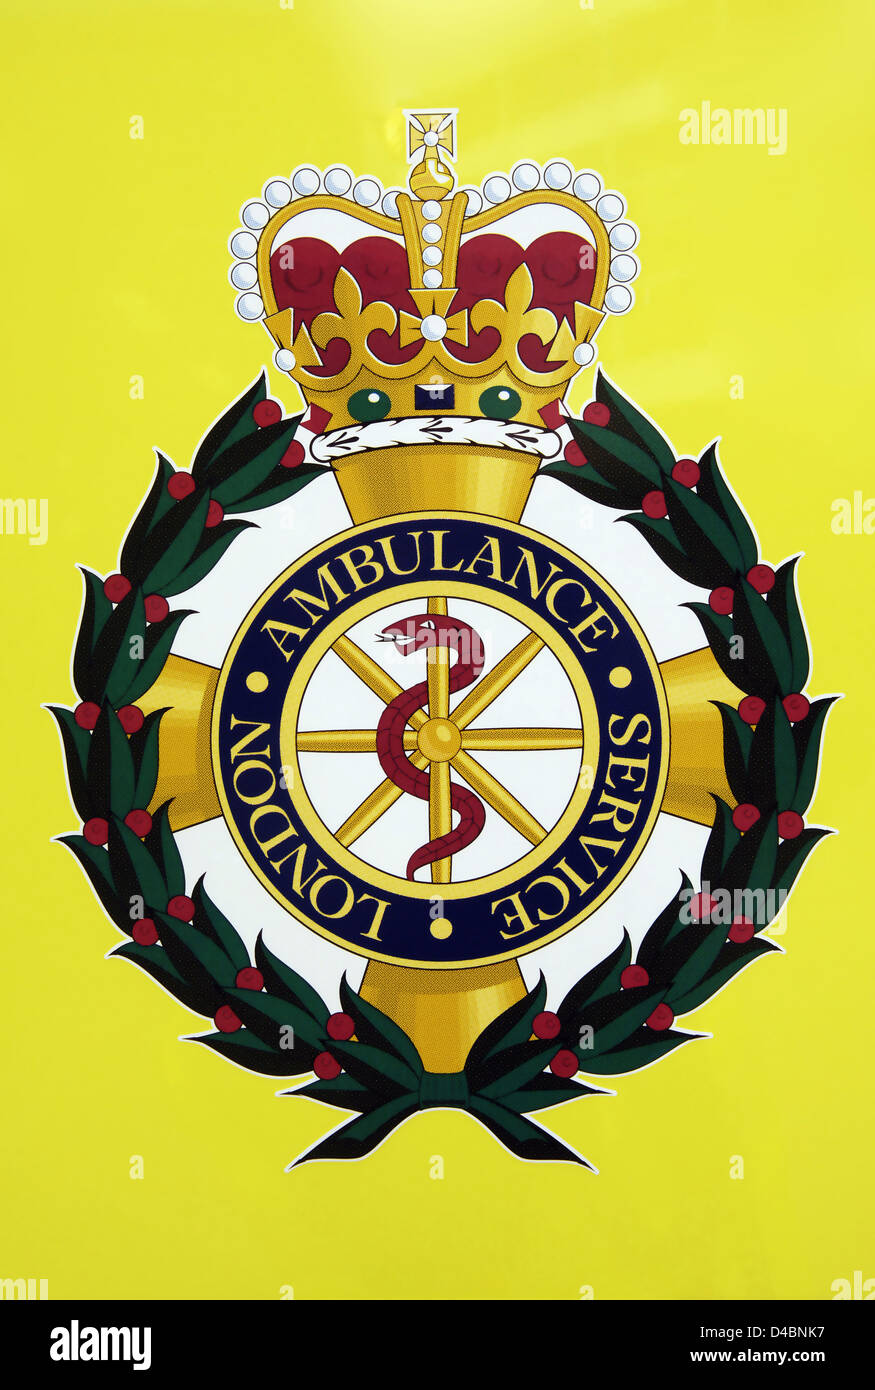 London Ambulance emblem Stock Photo